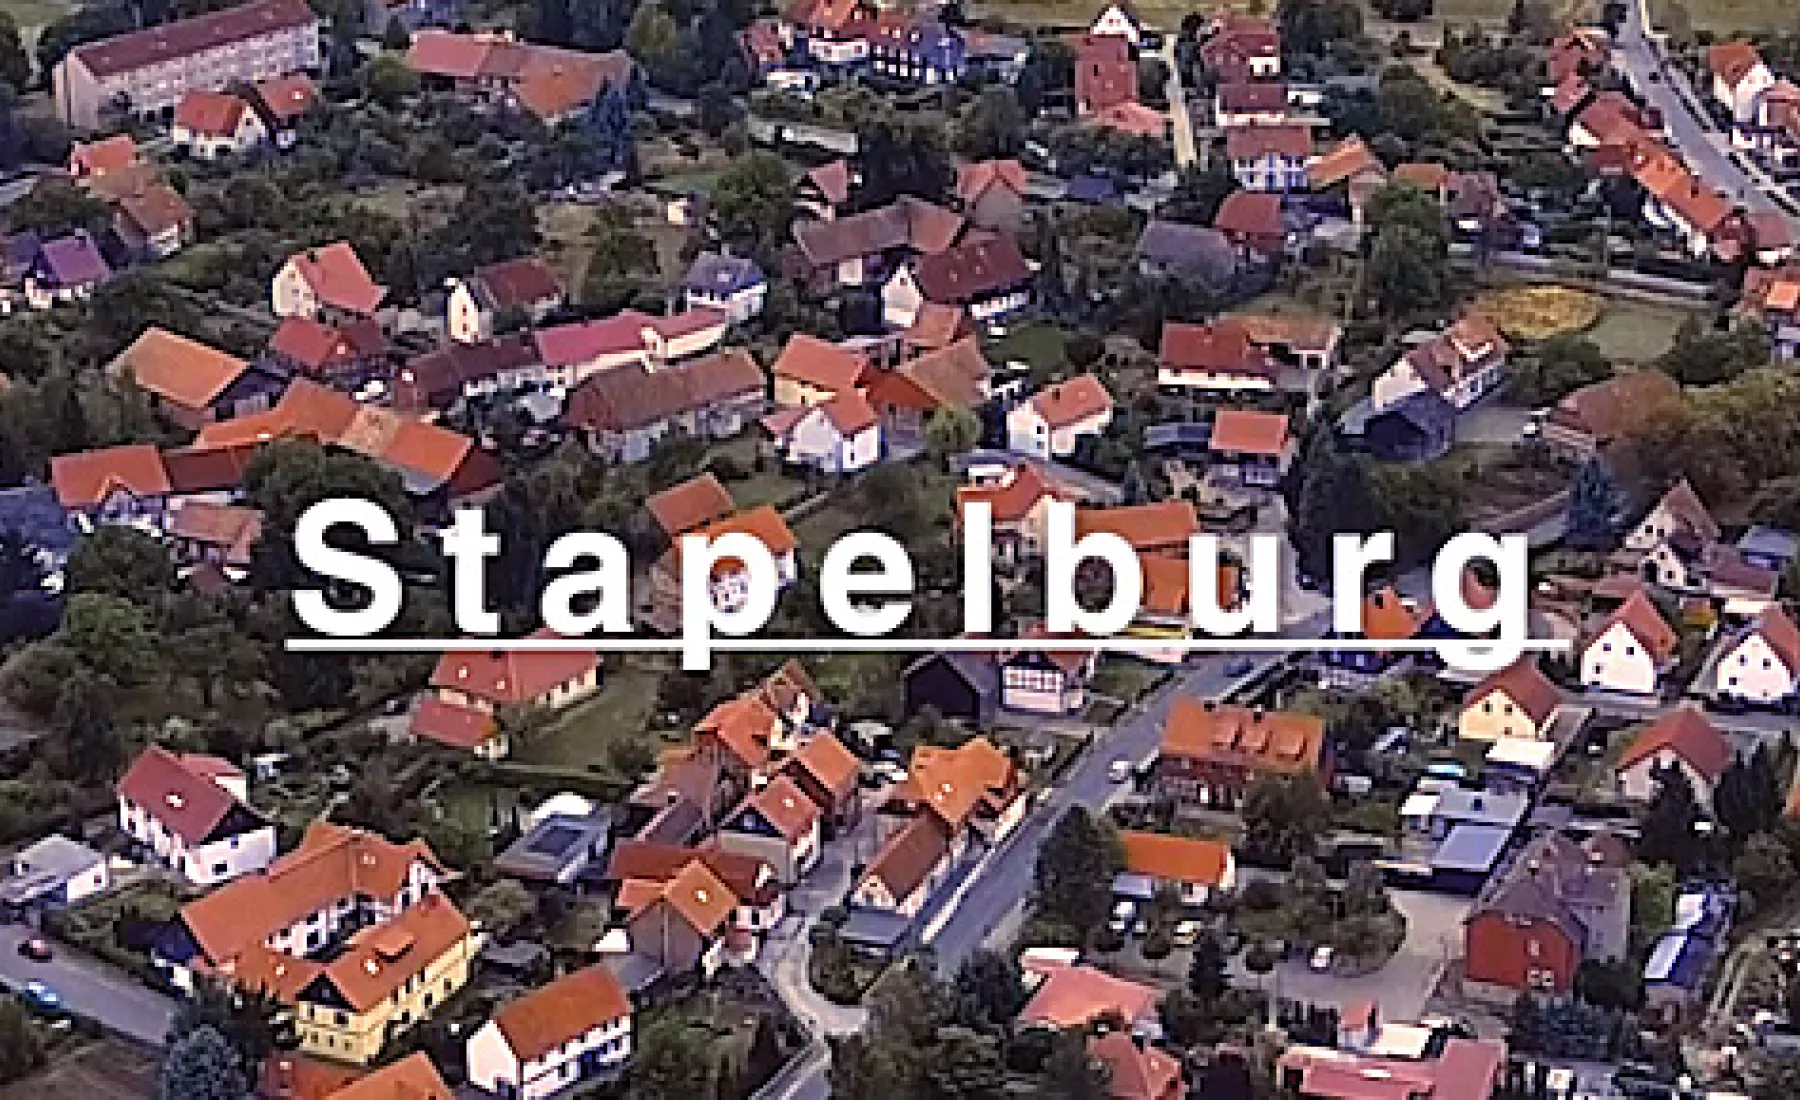 Stapelburg